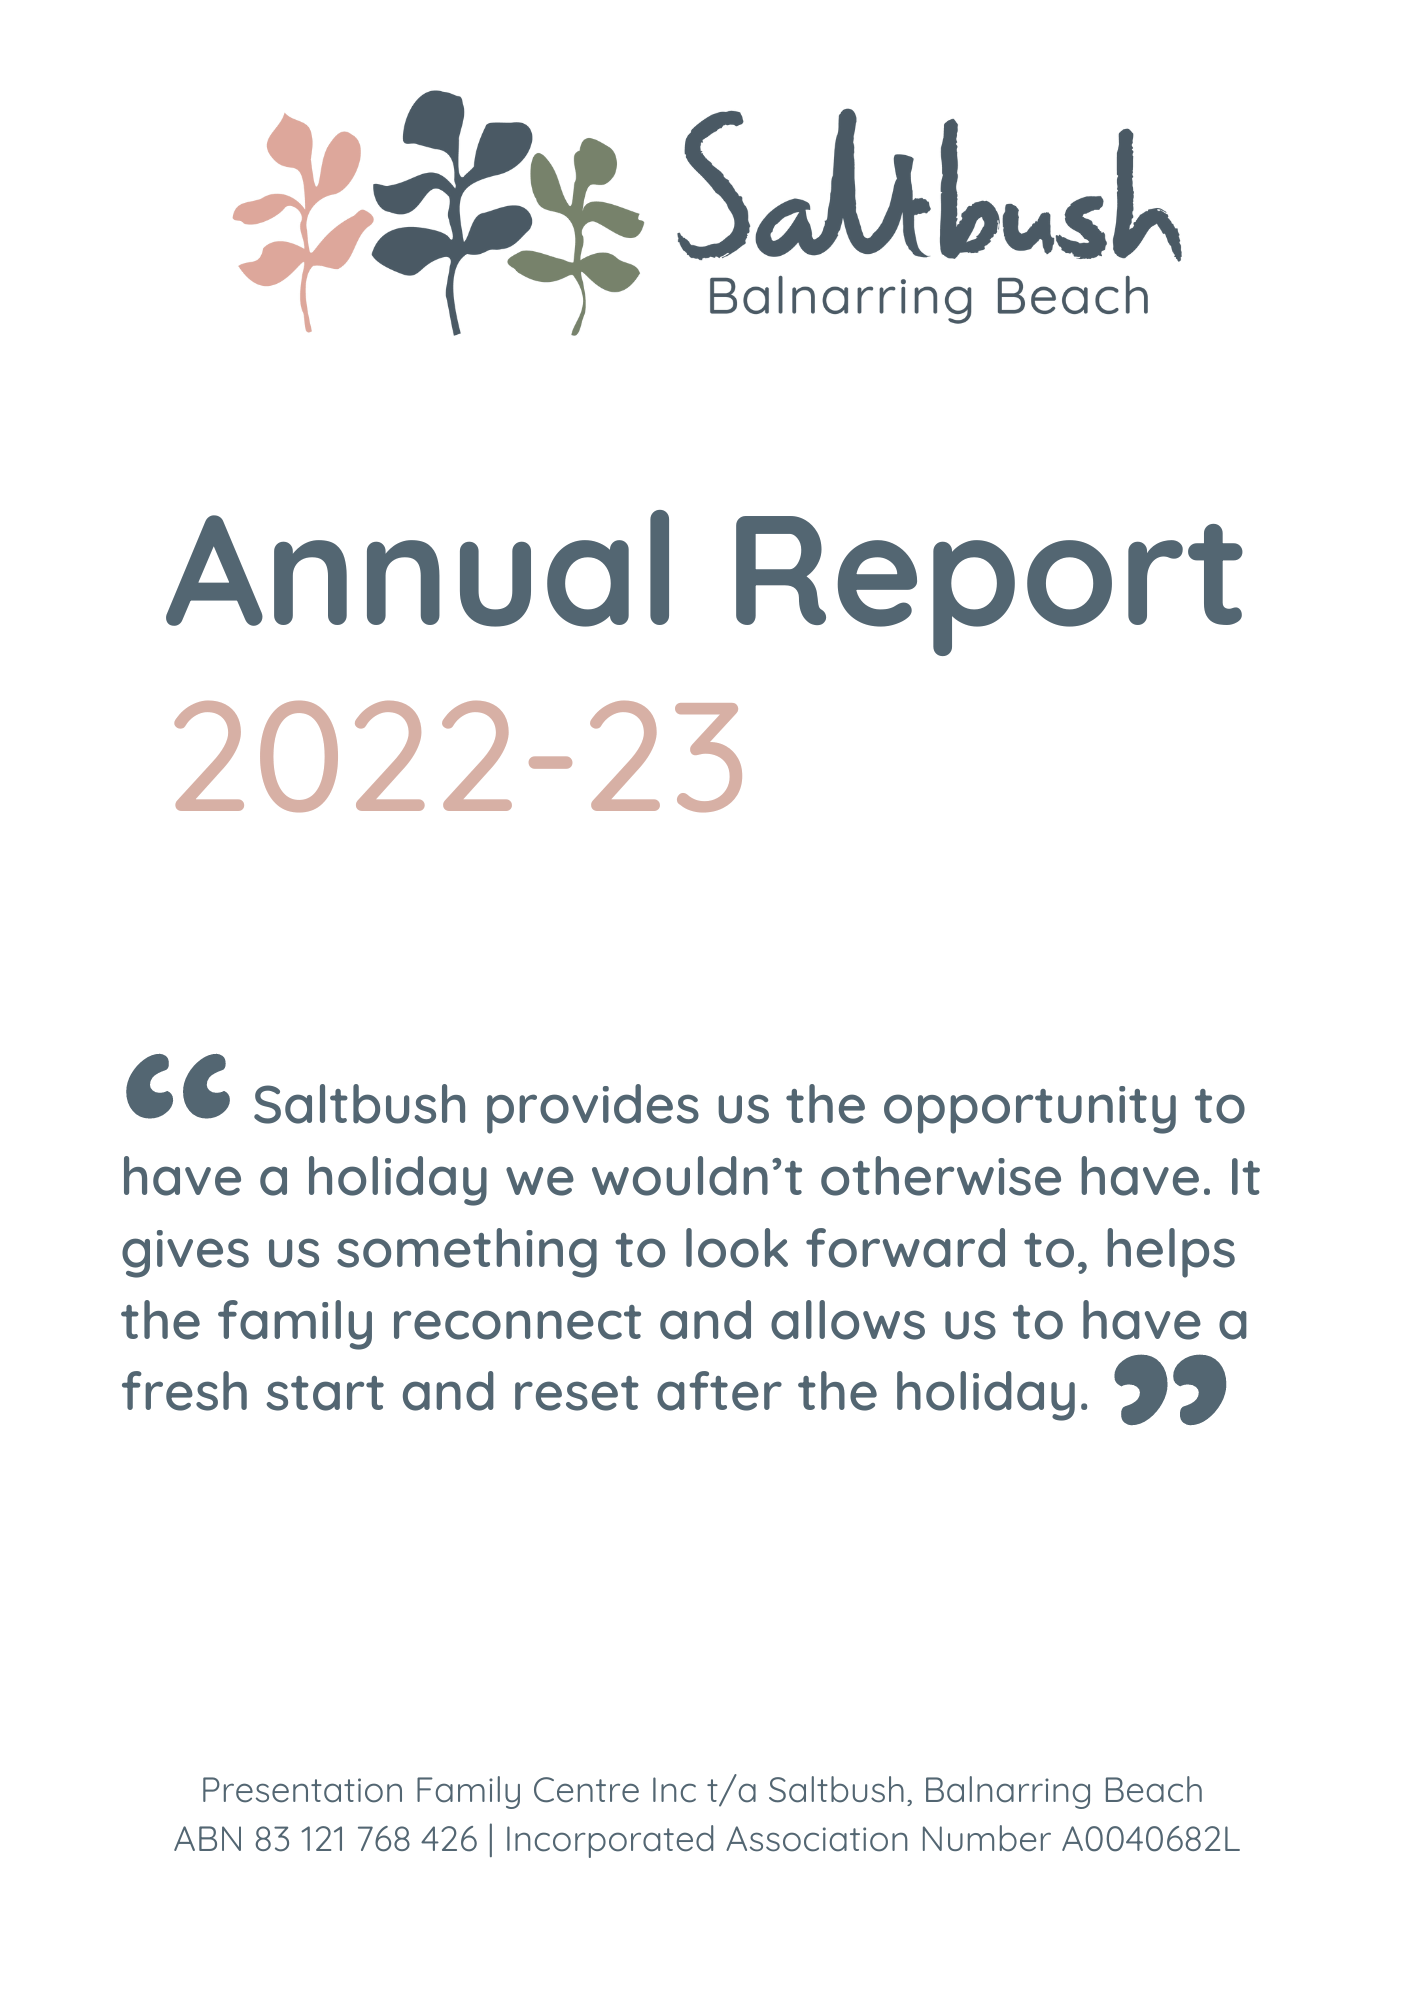 Annual report image